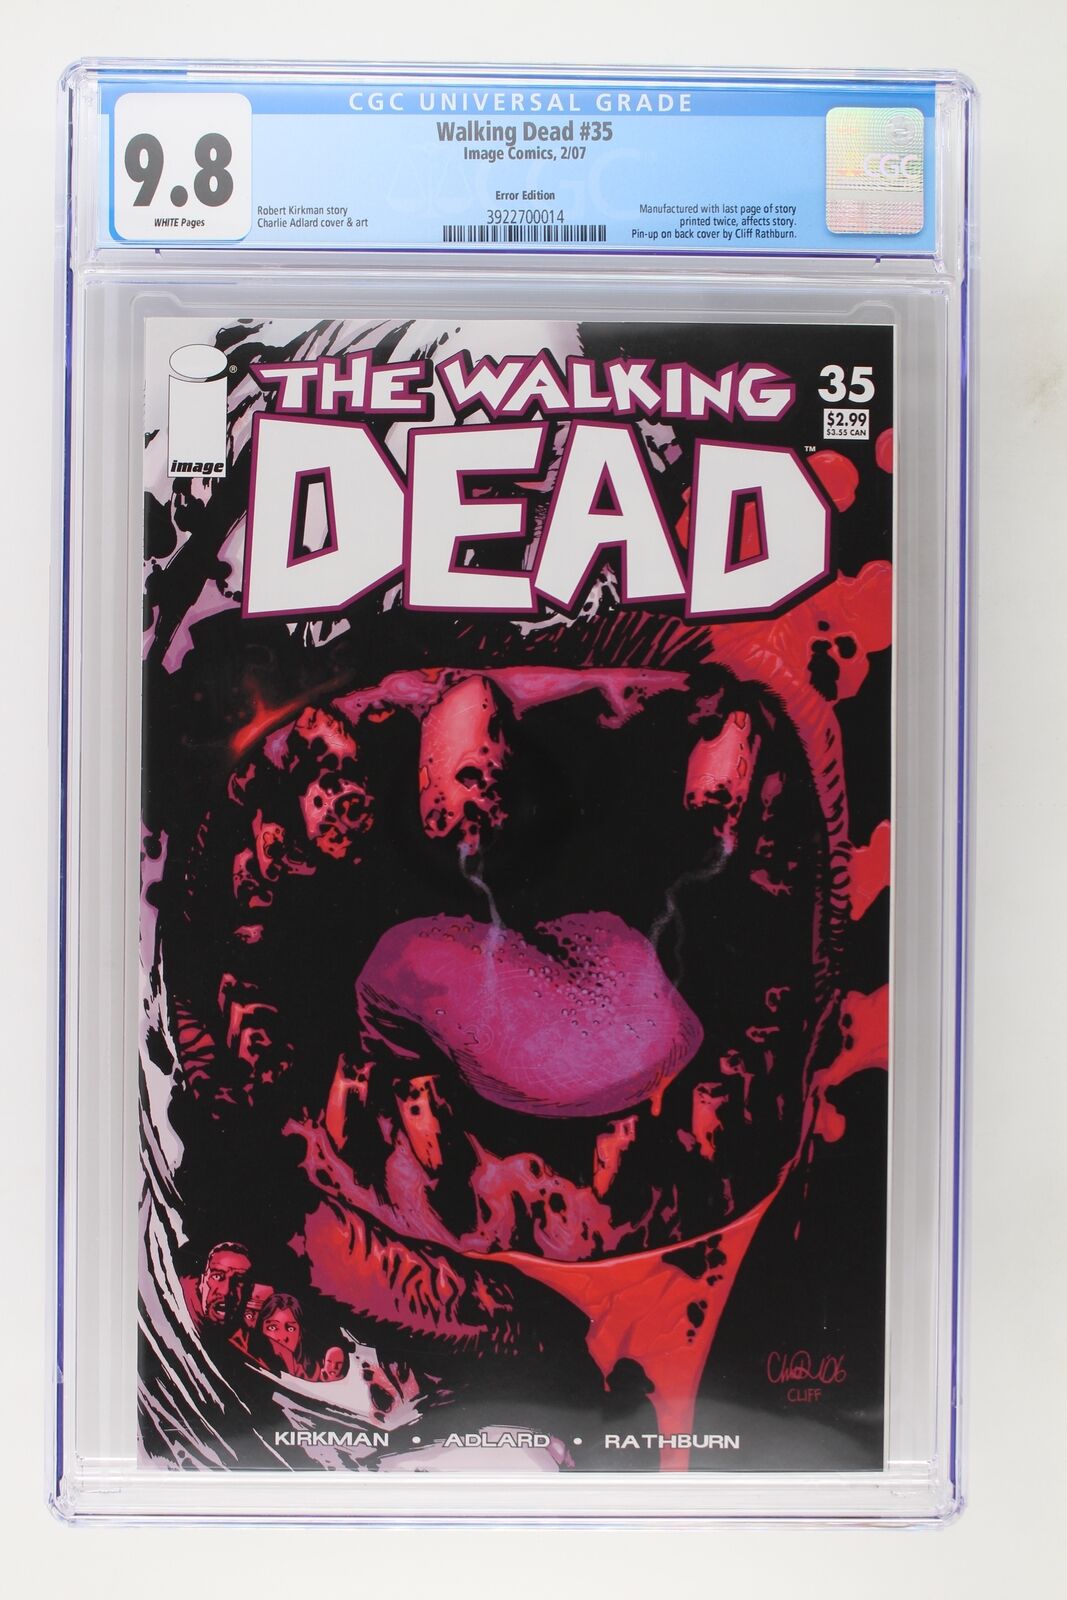 Walking Dead #35 - Image 2007 CGC 9.8 - Error Story Print